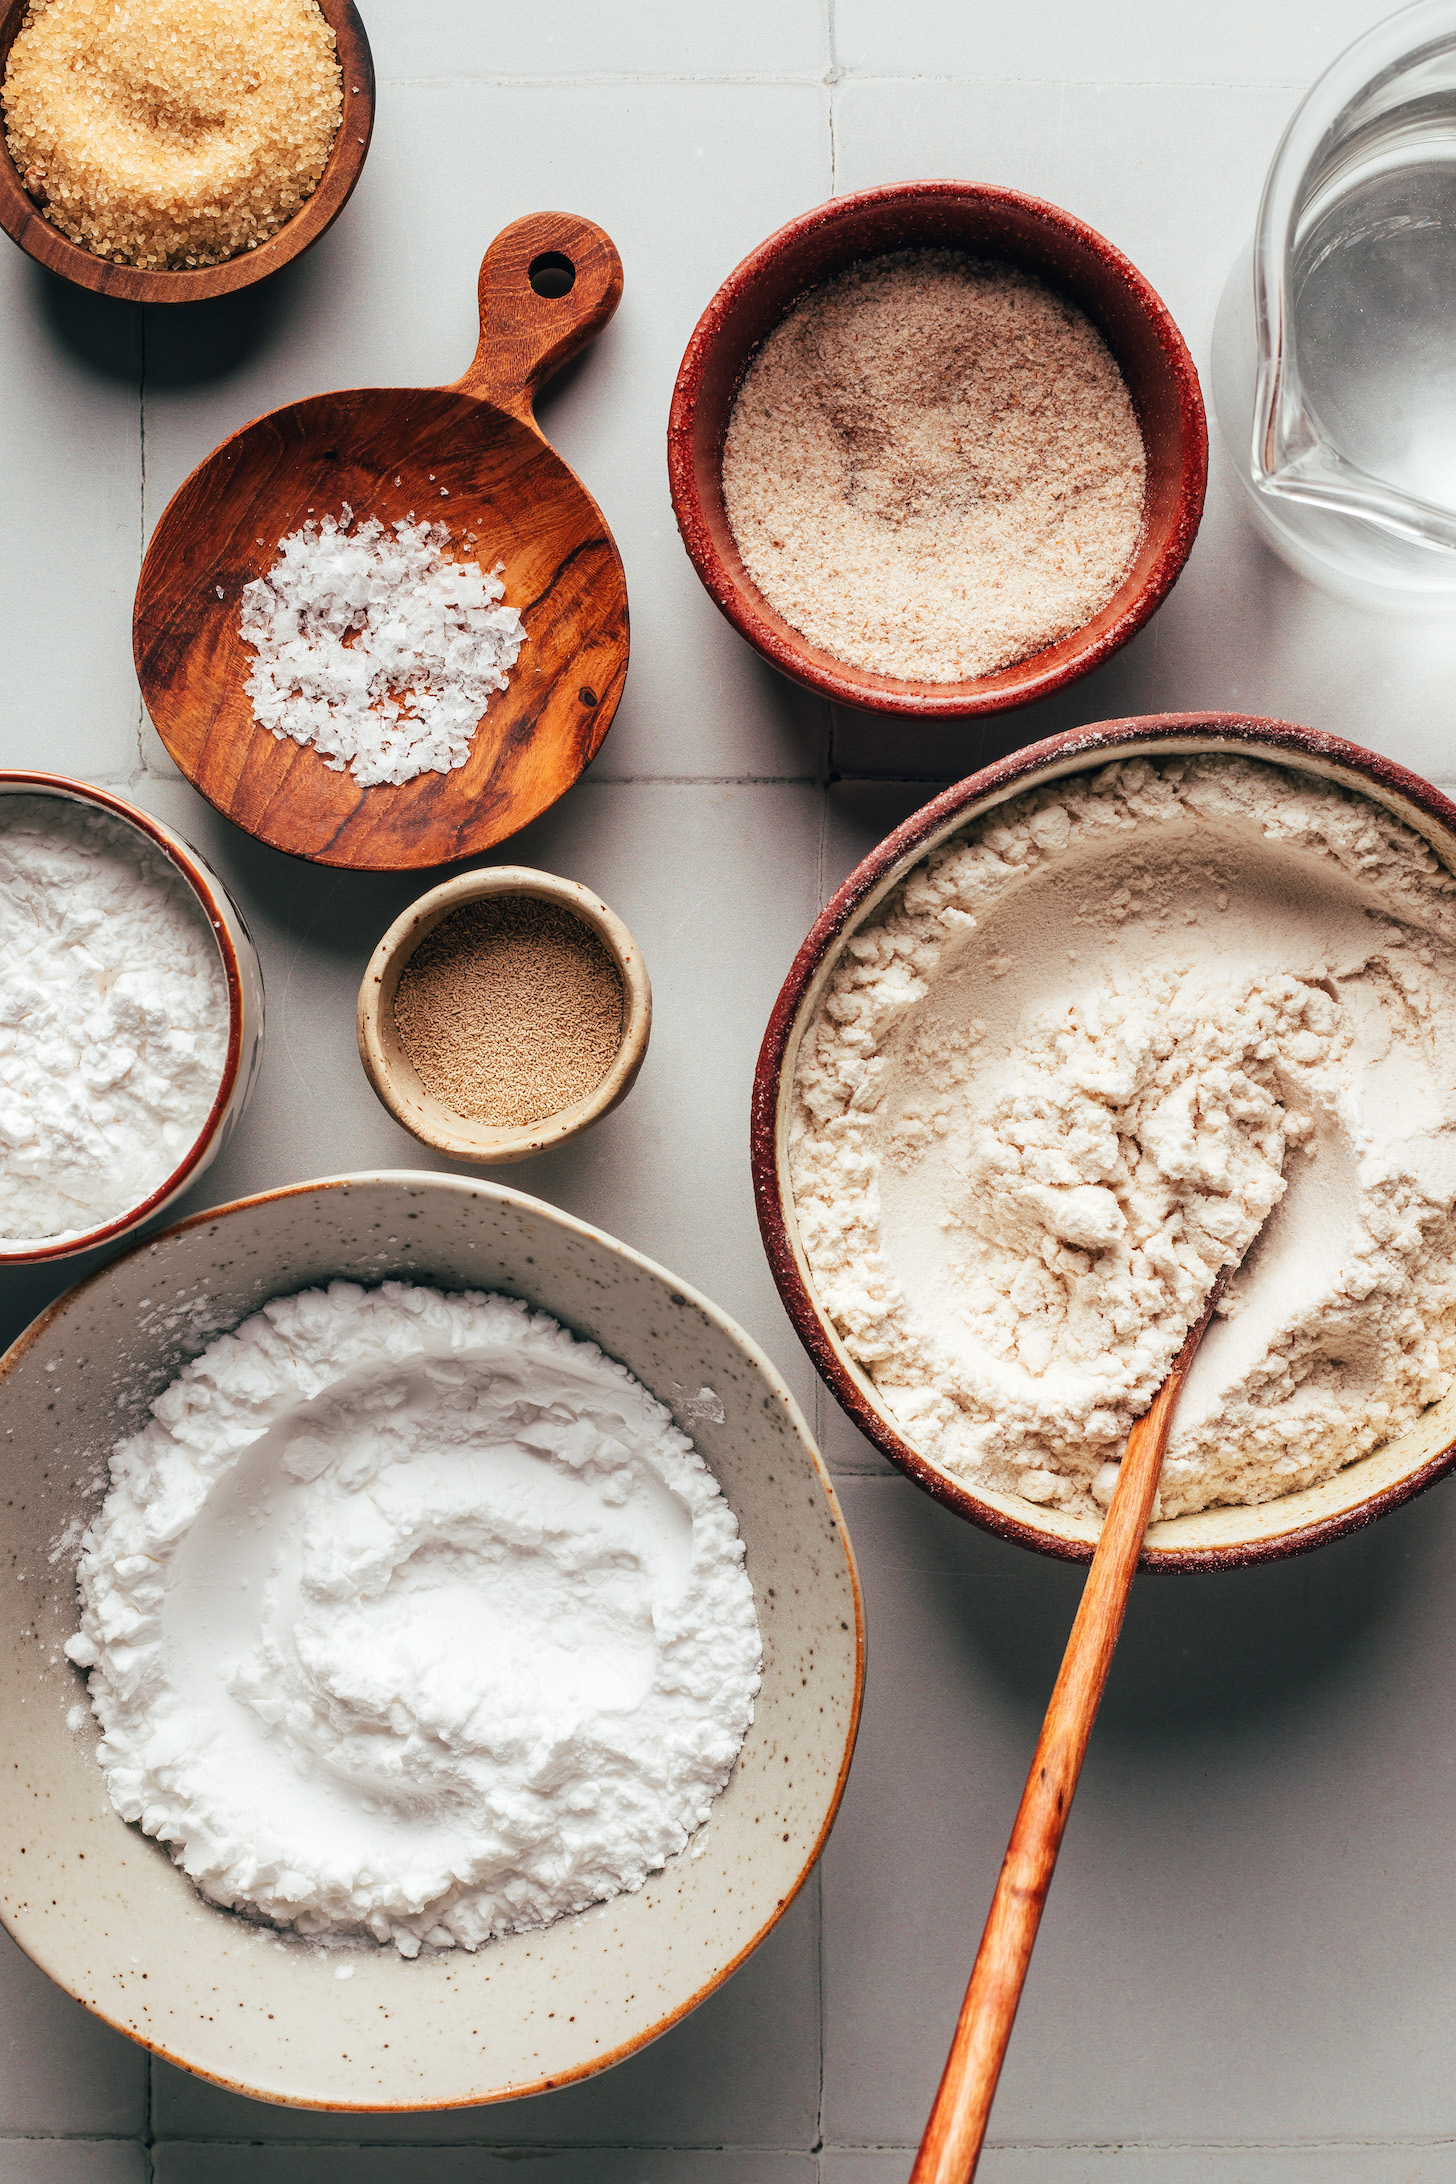 Cane sugar, sea salt, potato starch, tapioca flour, yeast, brown rice flour, psyllium husk powder, and warm water